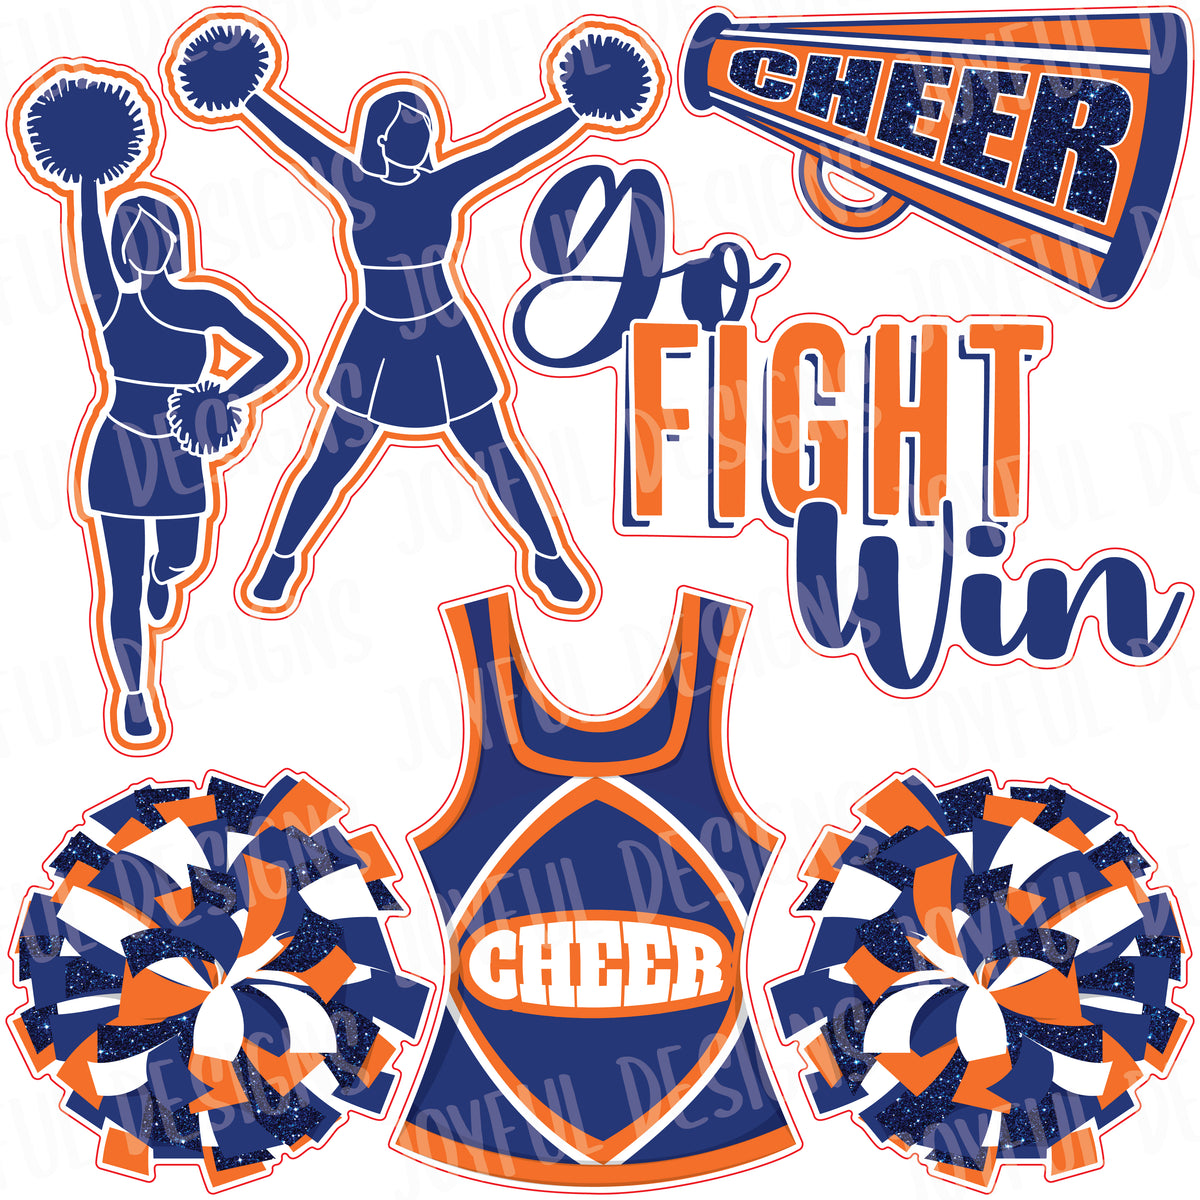 Go Fight Win Cheerleader Half Set - Multiple Color Options